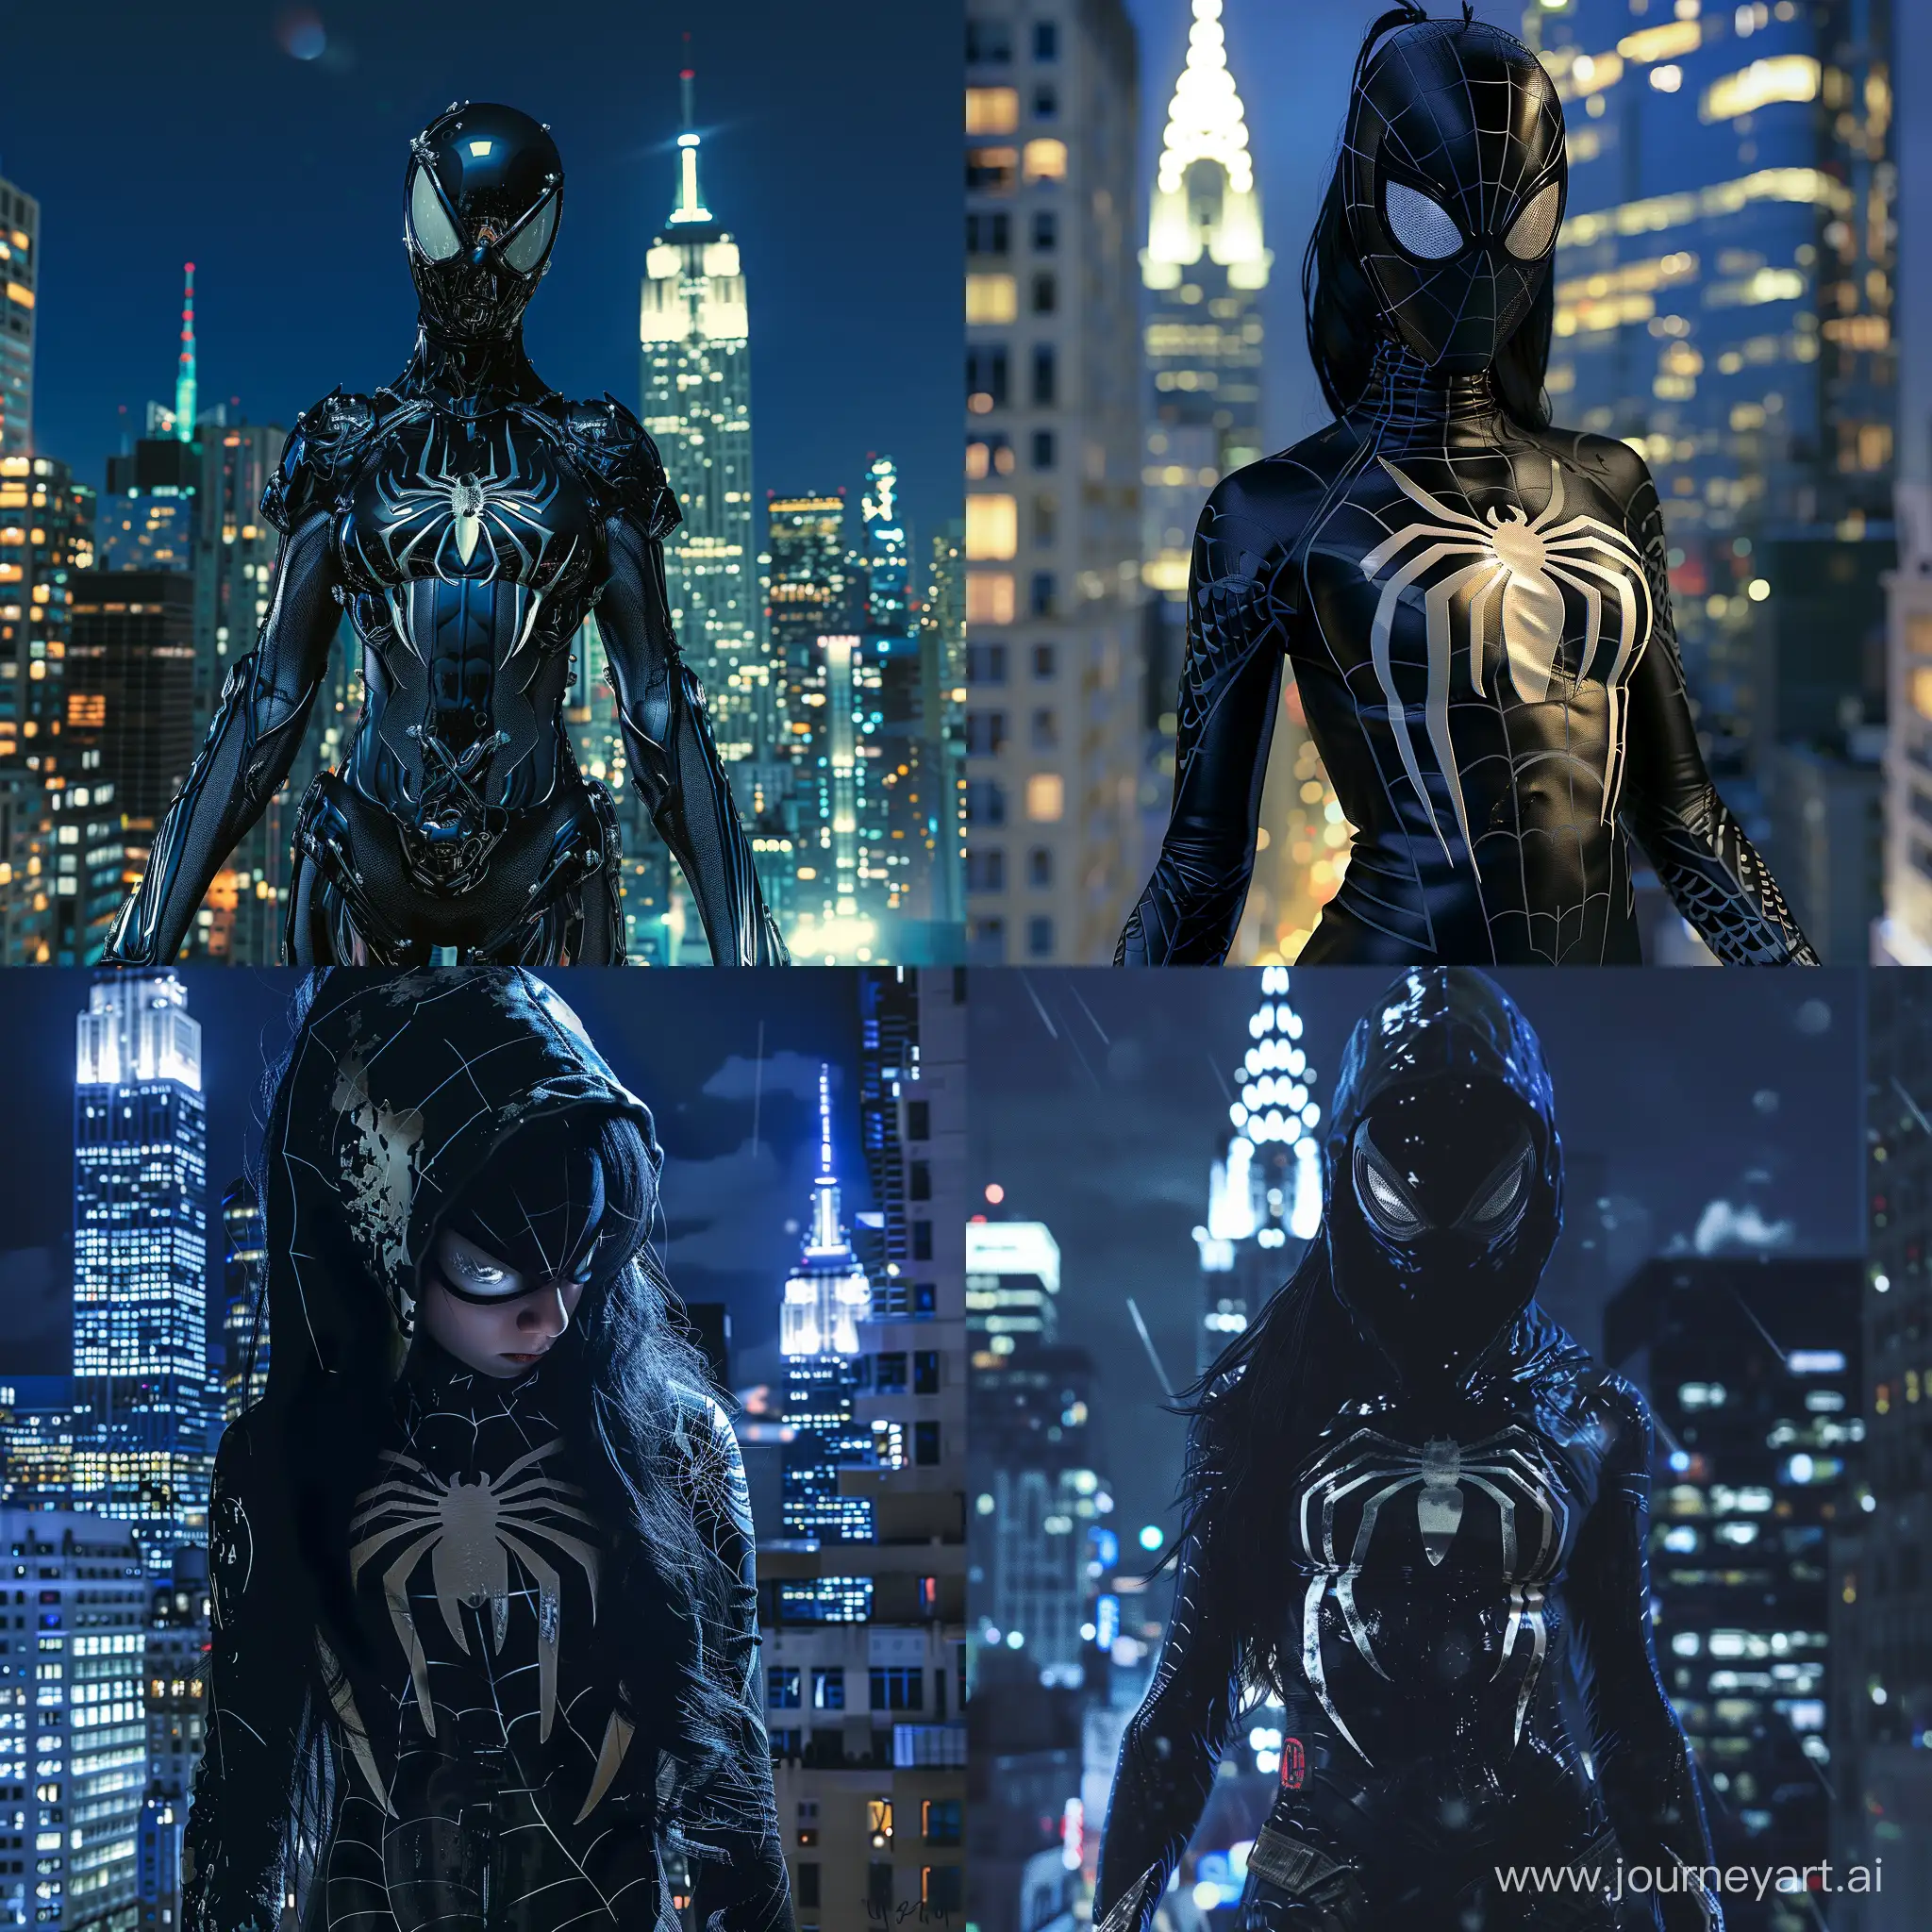 Girl-in-SpiderMan-Costume-against-Night-Cityscape-Skyline